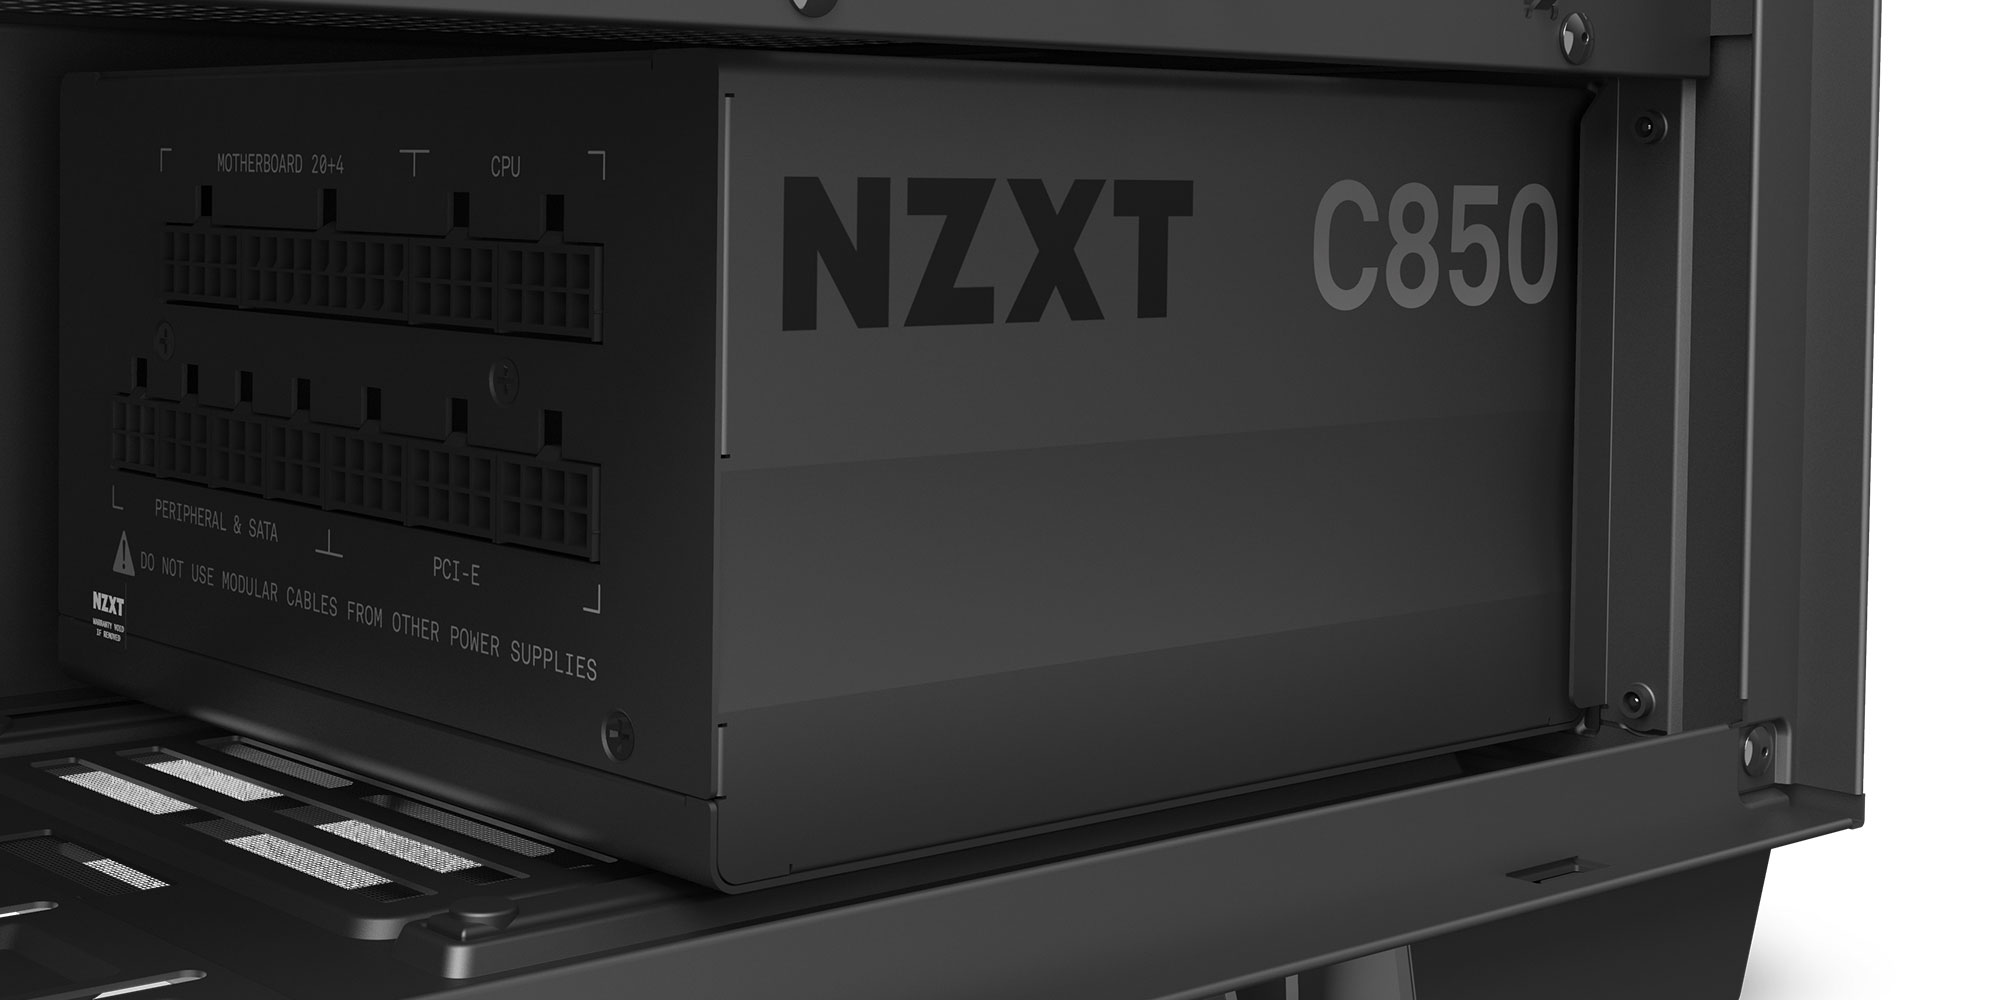 nzxt c850 power supply